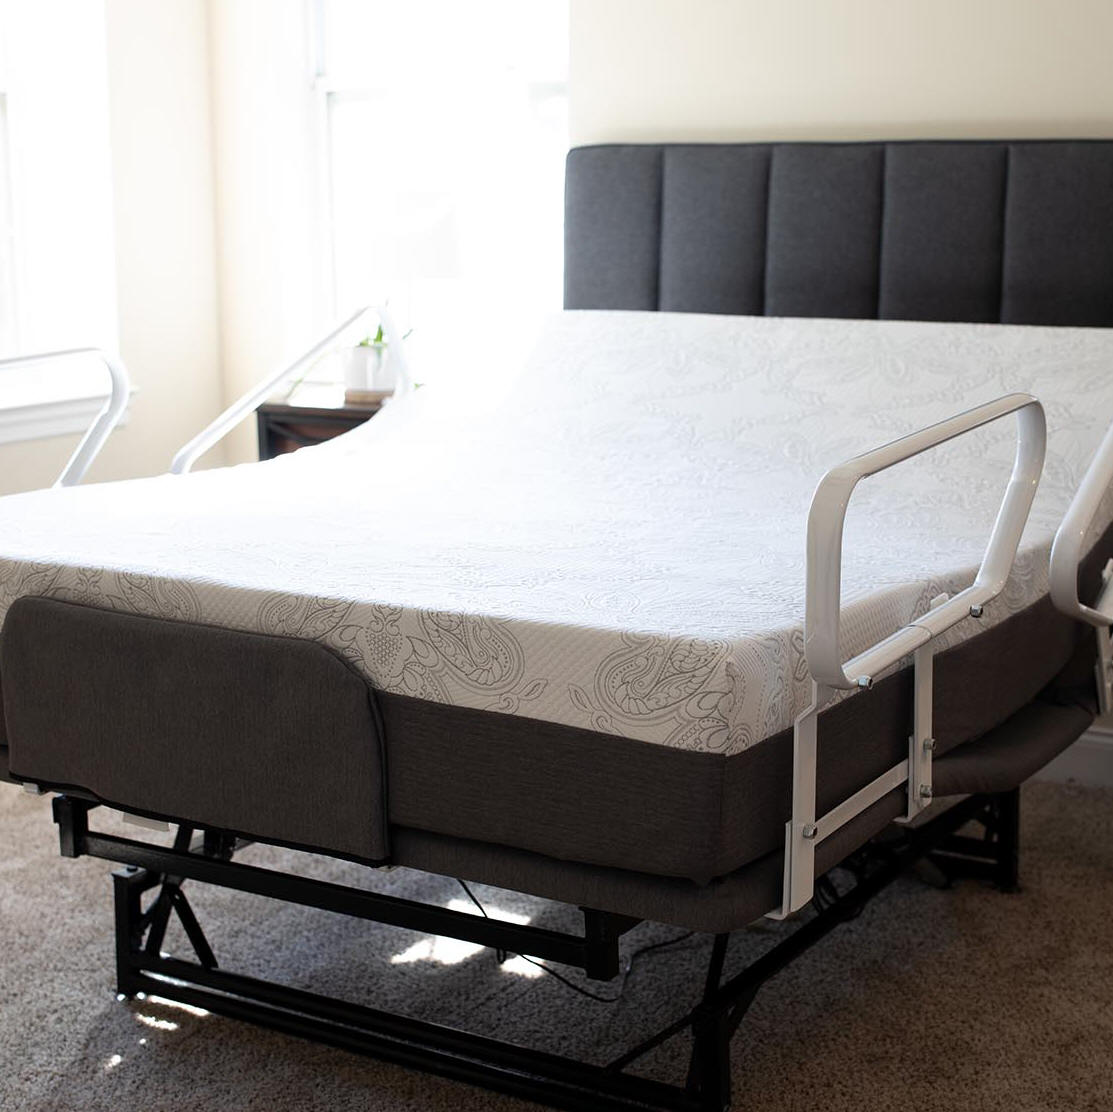 Thousand Oaks flexabed 3 motor high low adjustable bed